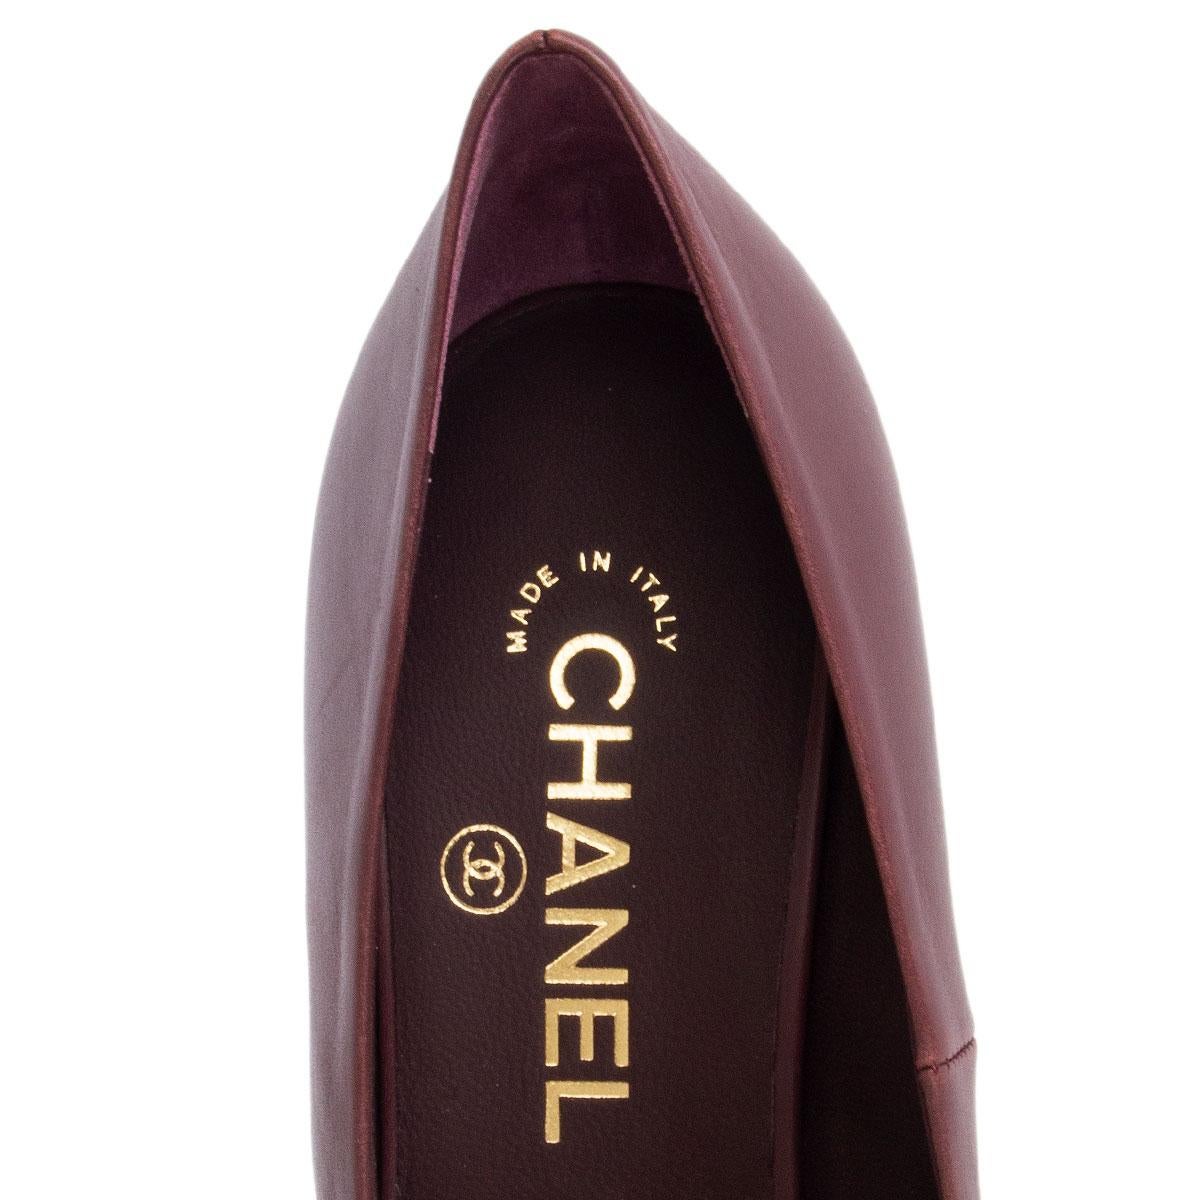 CHANEL burgundy leather CHAIN HEEL PEEP-TOE Pumps Shoes 38.5 1